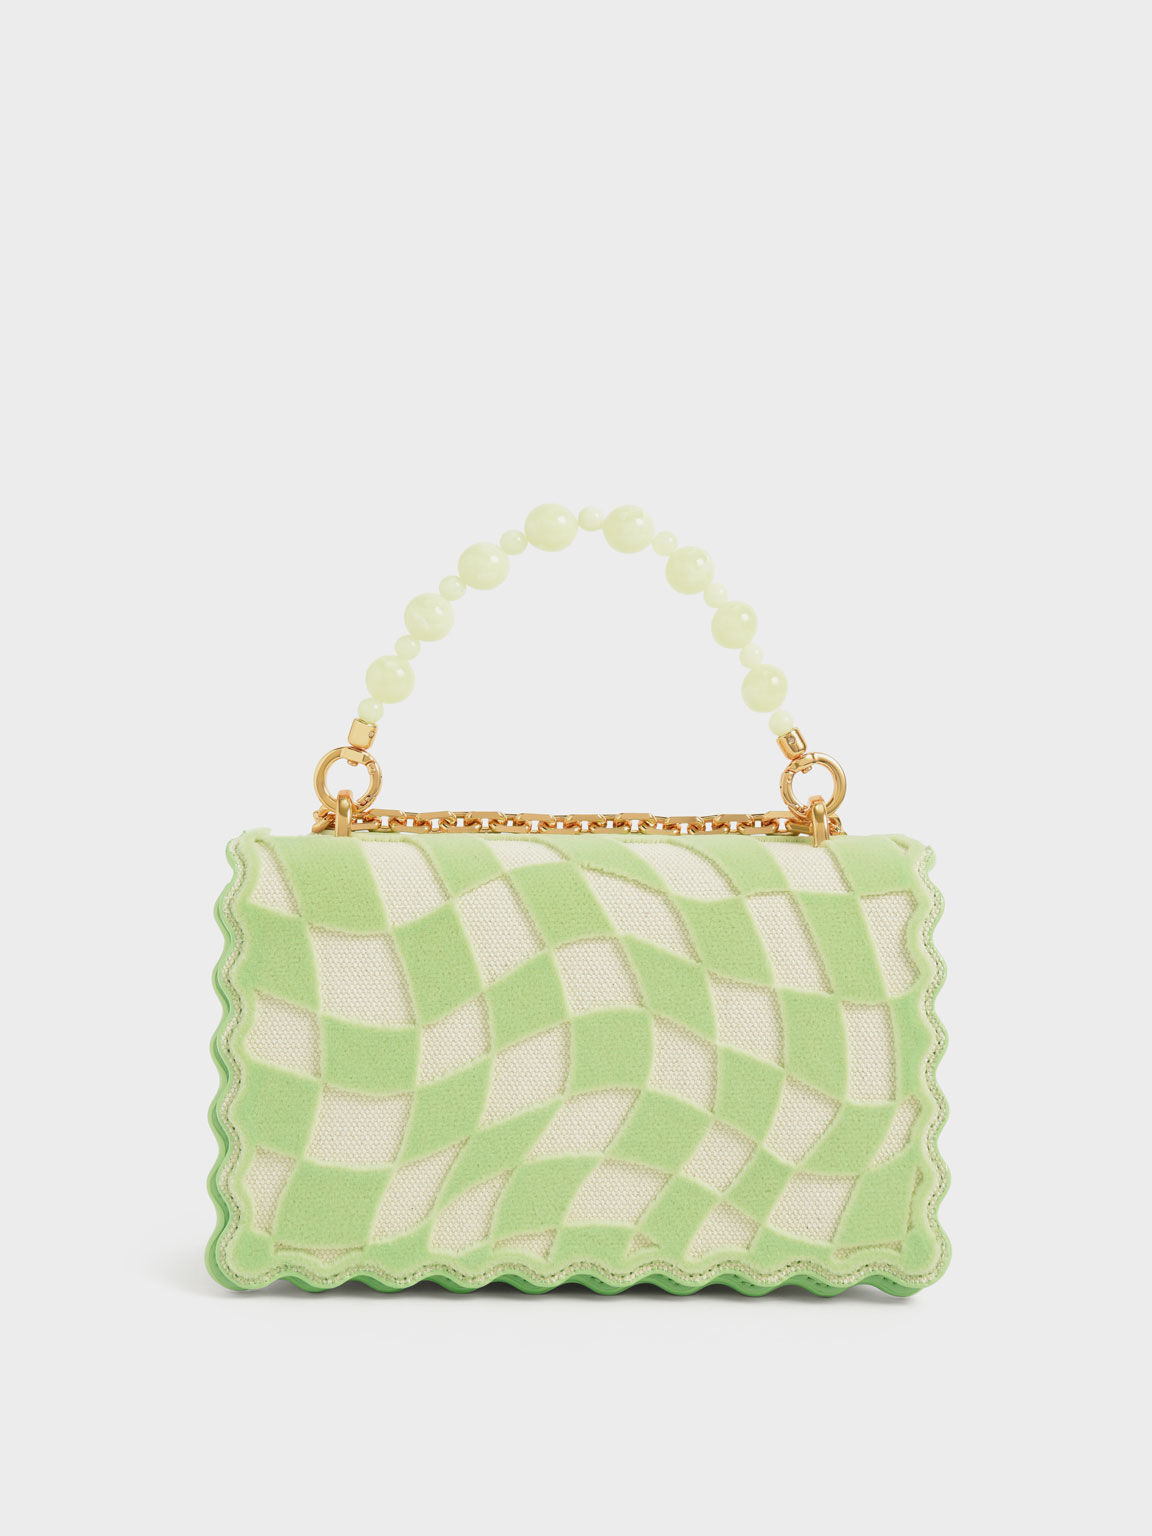 Rowan Beaded Chain Handle Checkered Bag, Mint Green, hi-res